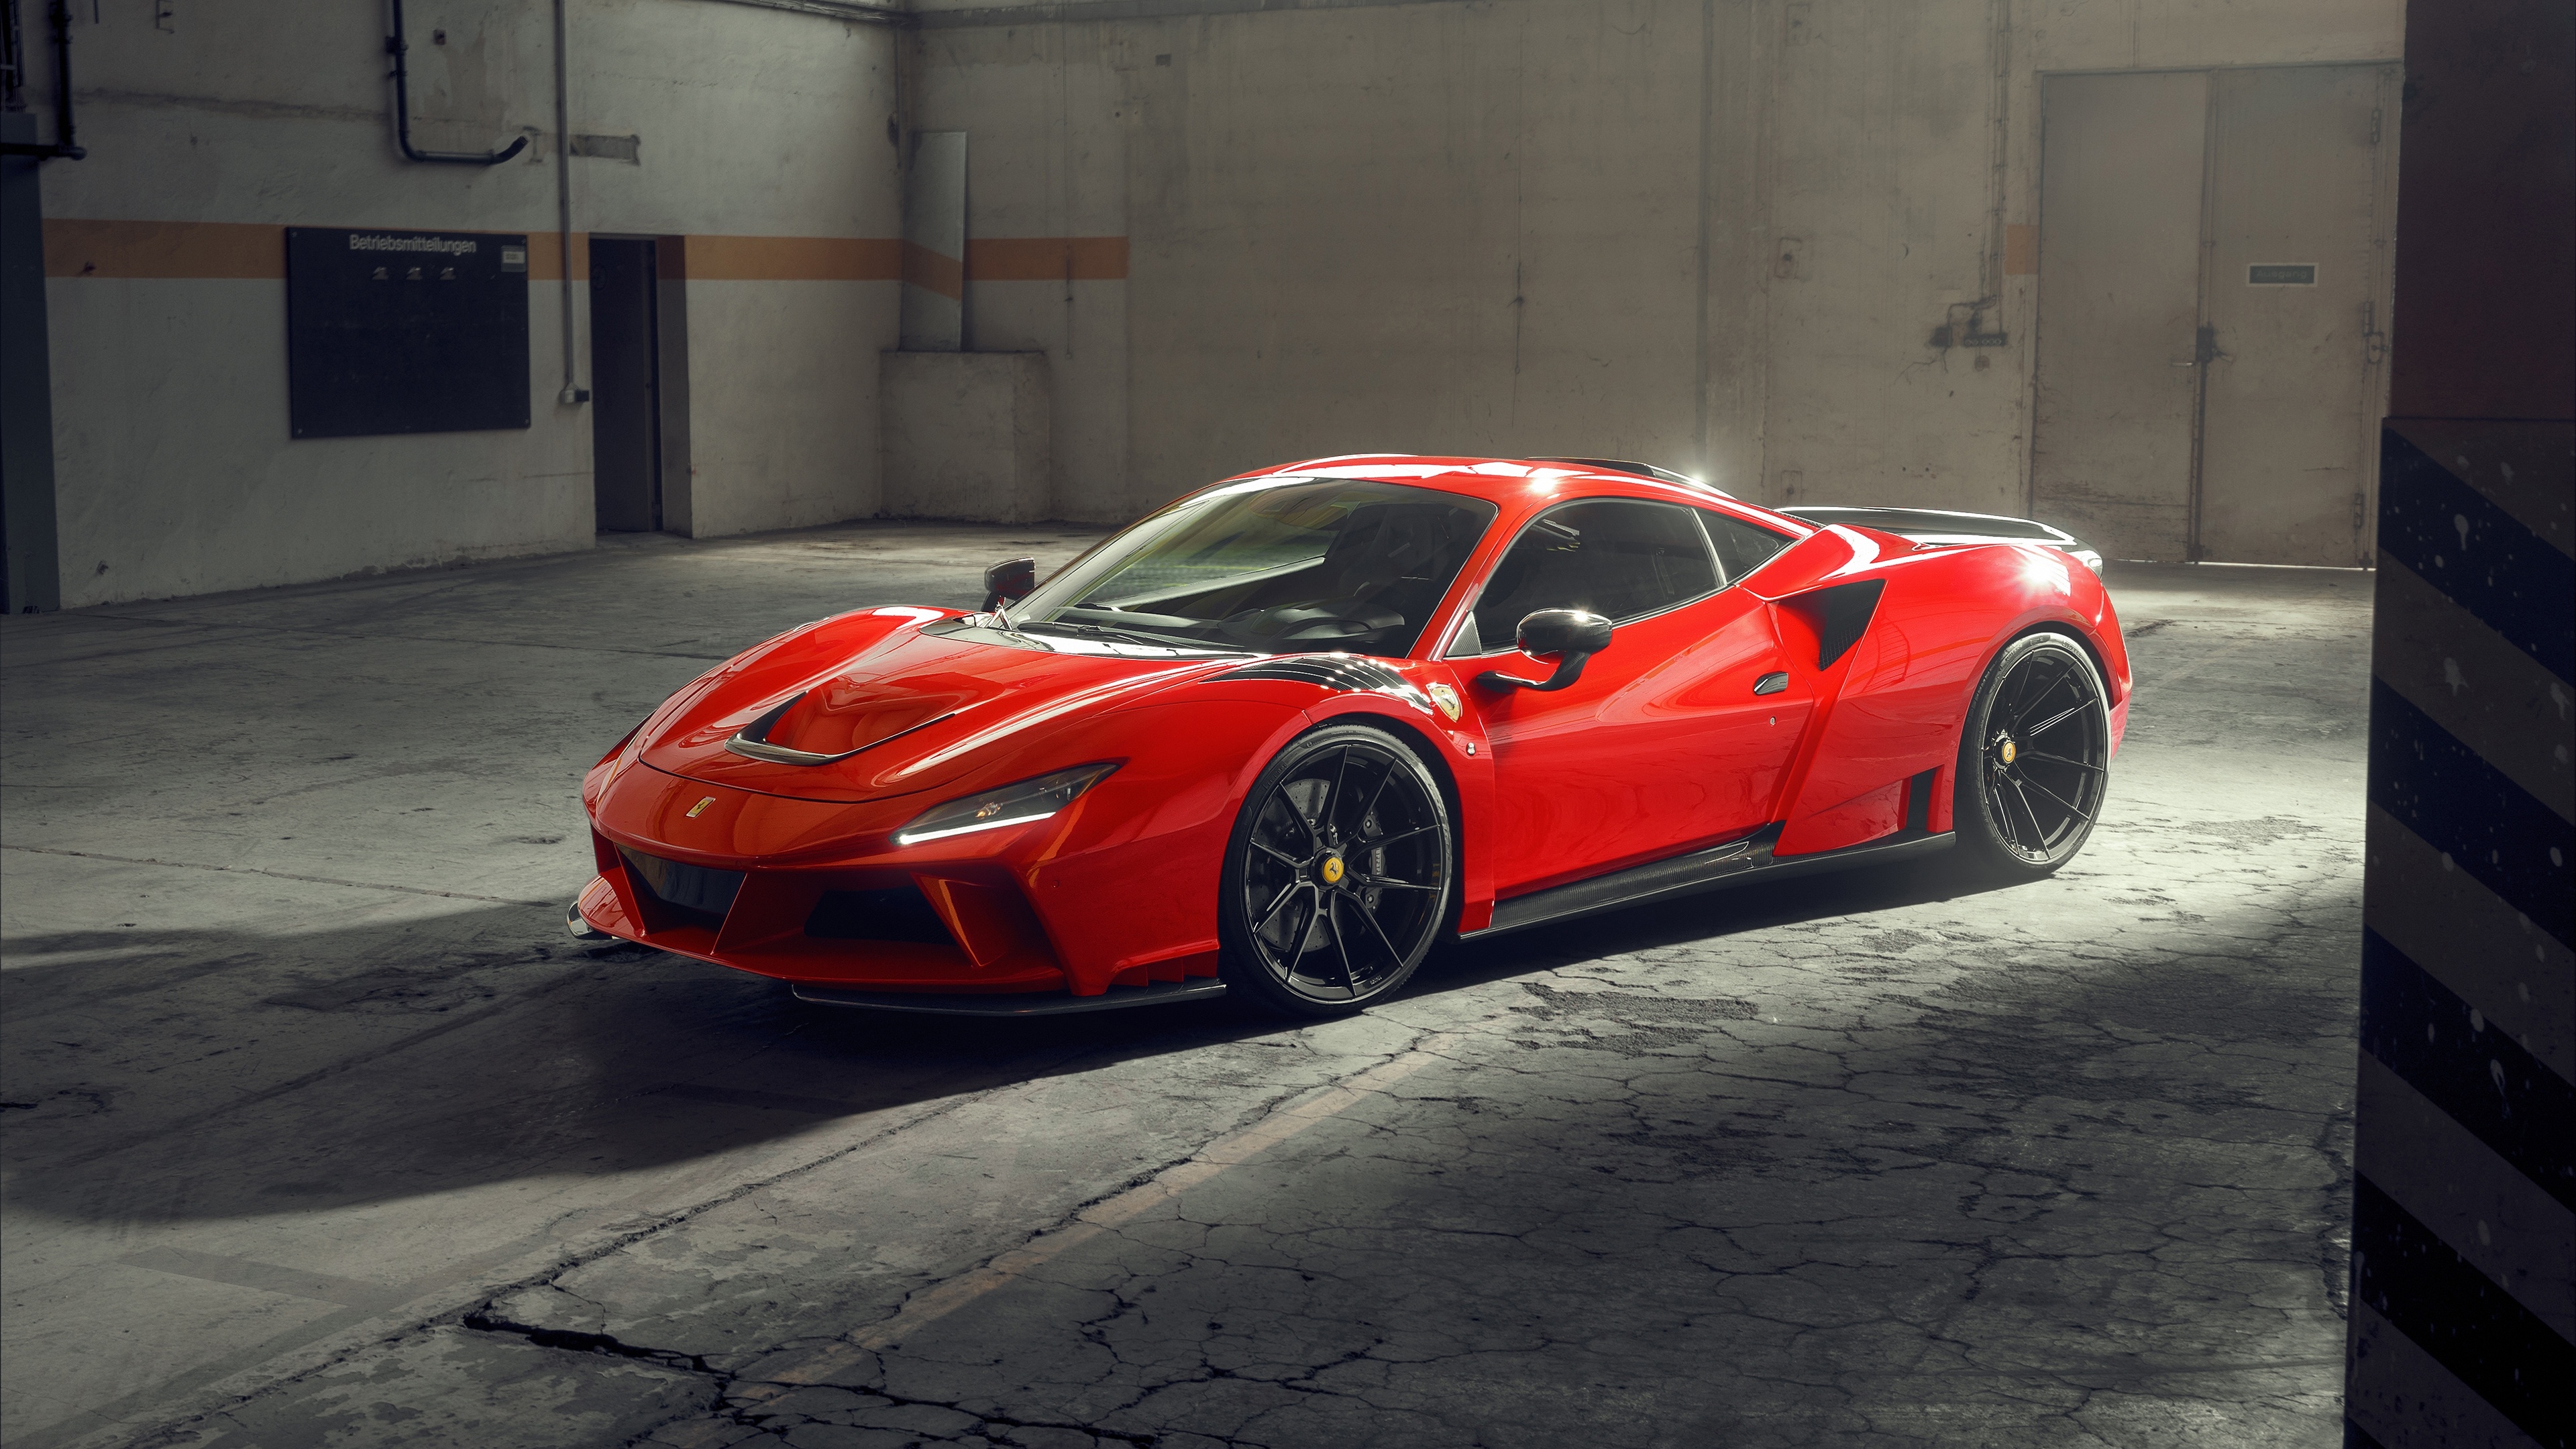 Ferrari F8, Tribute wallpaper, High-resolution image, Luxury sports car, 3840x2160 4K Desktop